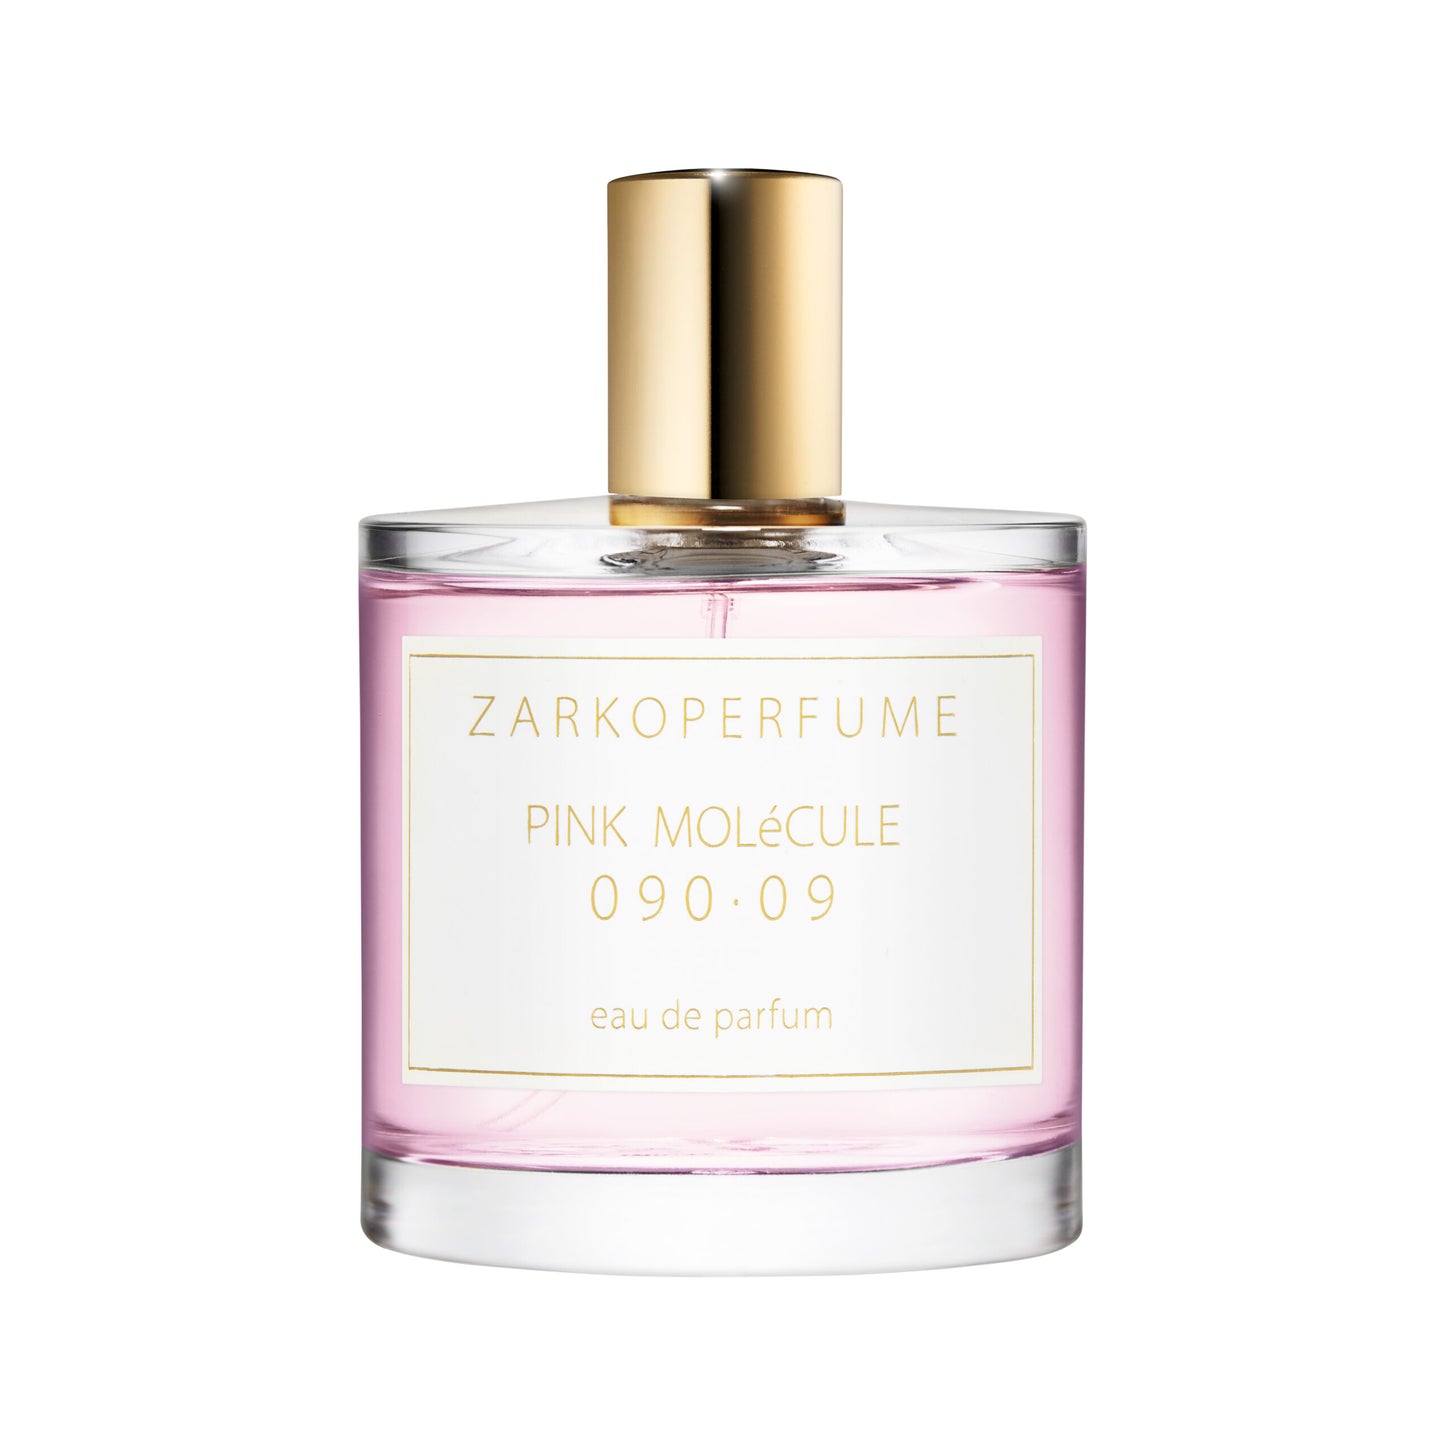 Zarko Parfume Pink Molecule 100 ml.